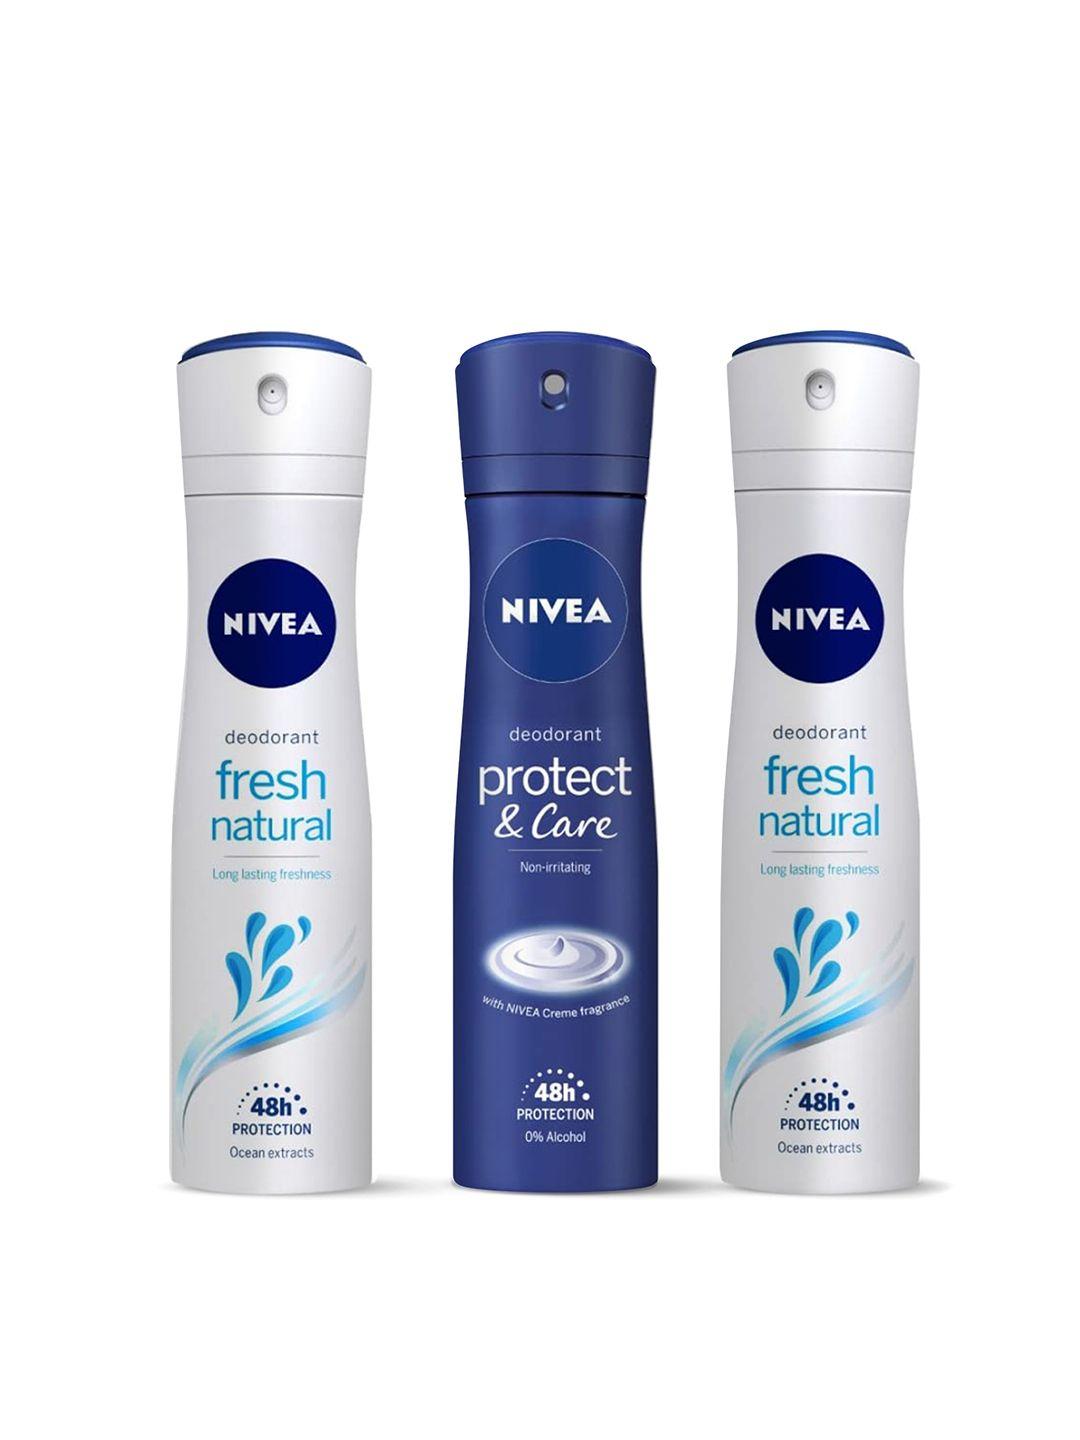 nivea women set of 3 deodorants - 2 fresh natural + protect & care - 150ml each